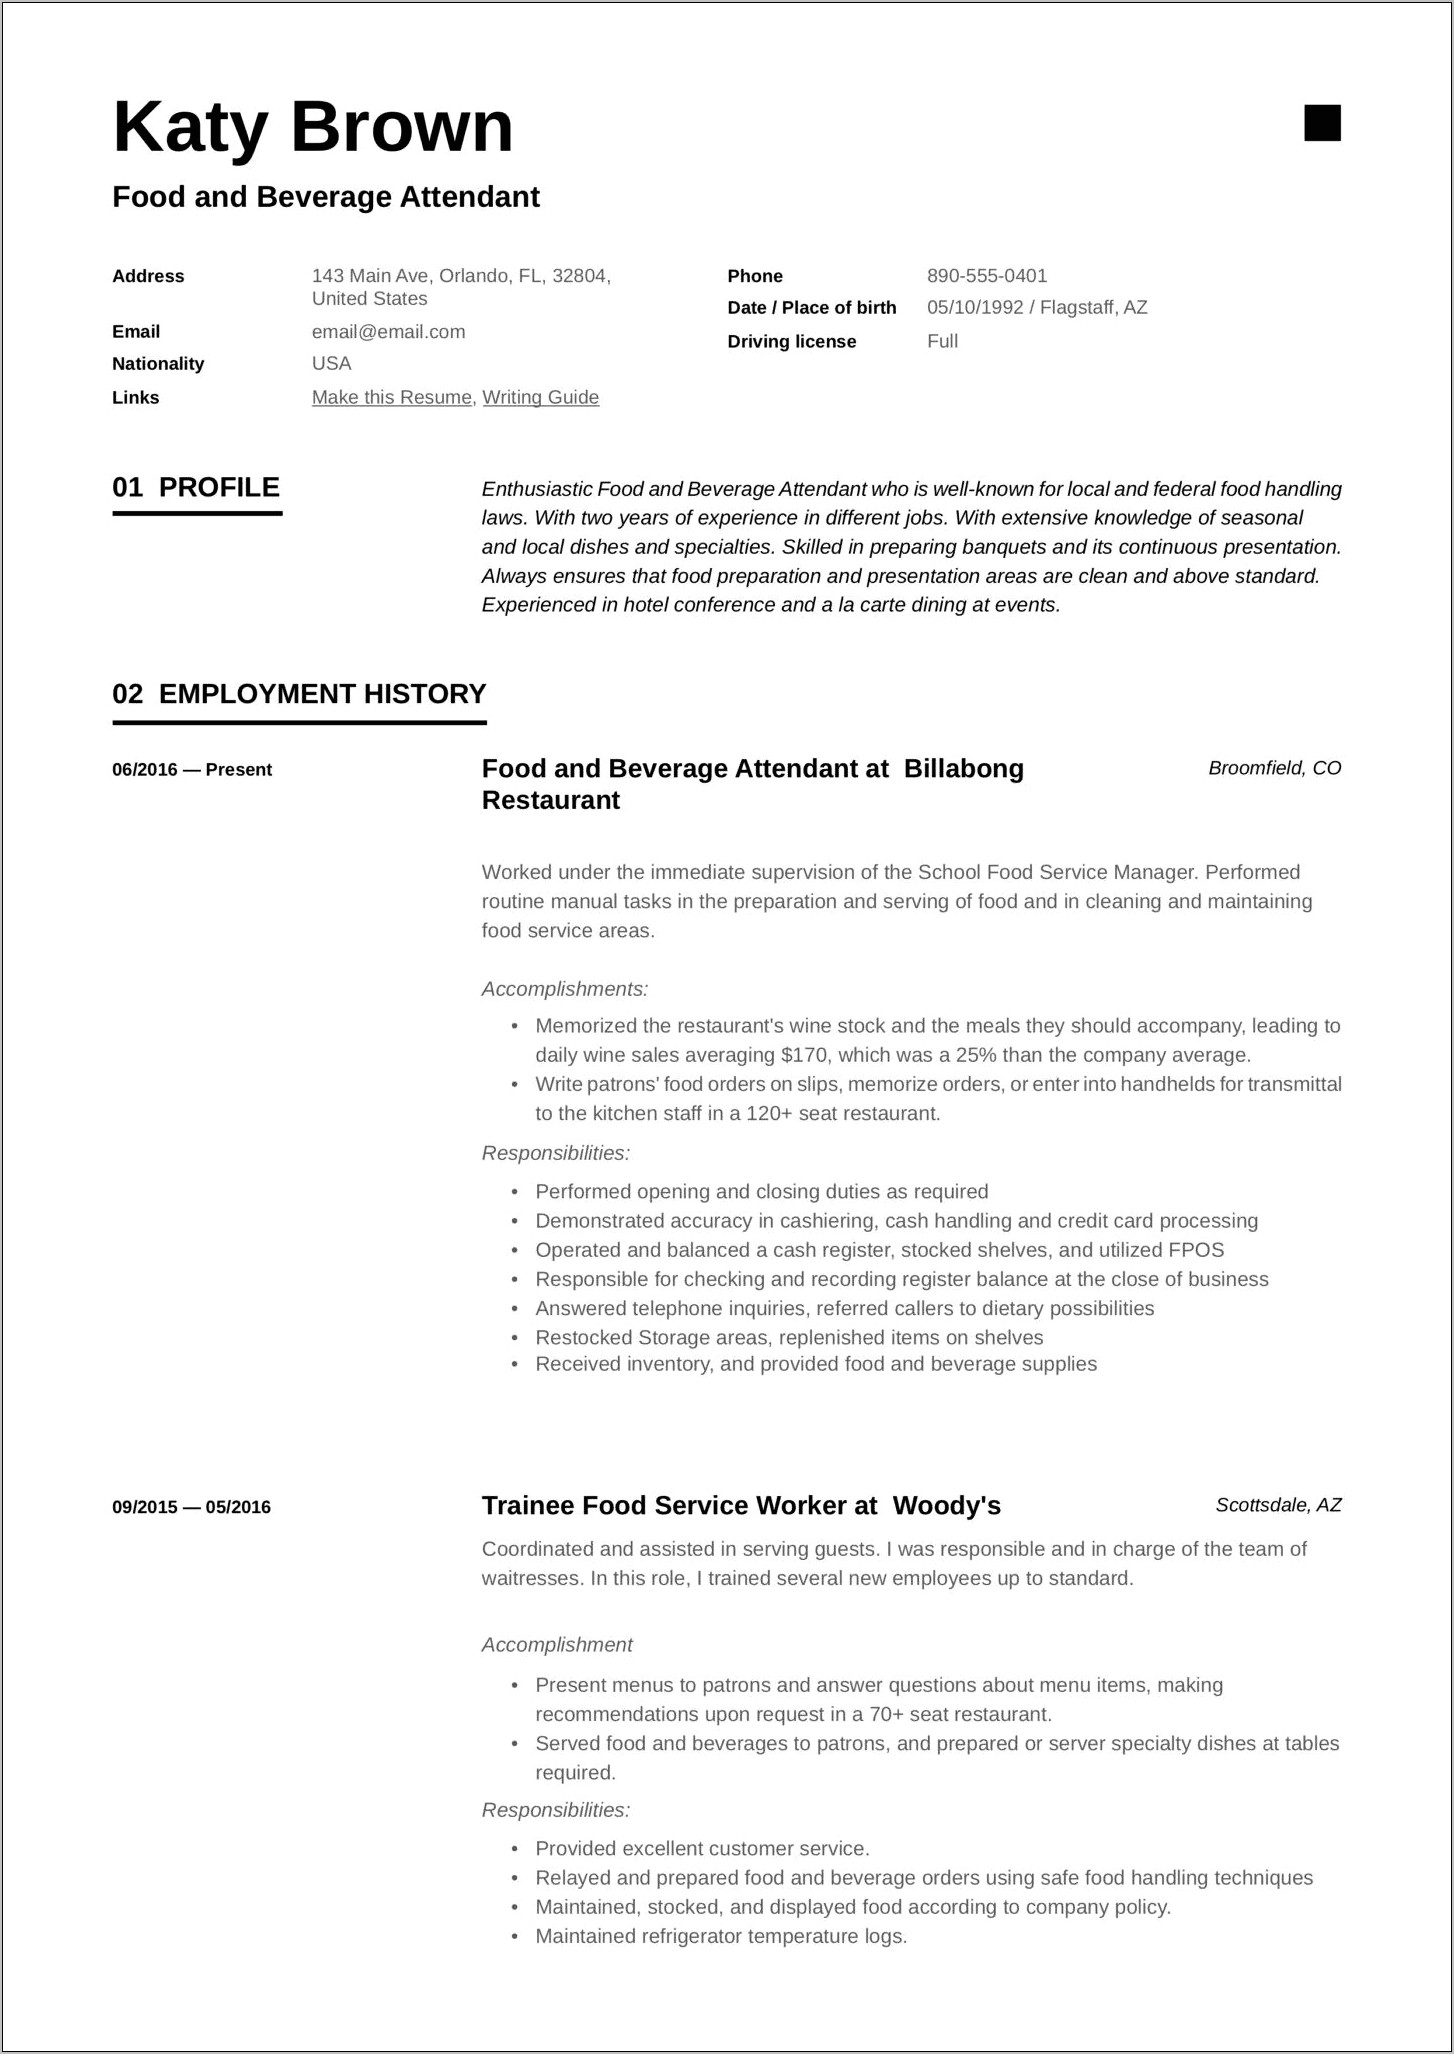 Food And Beverage Director Job Description Resume